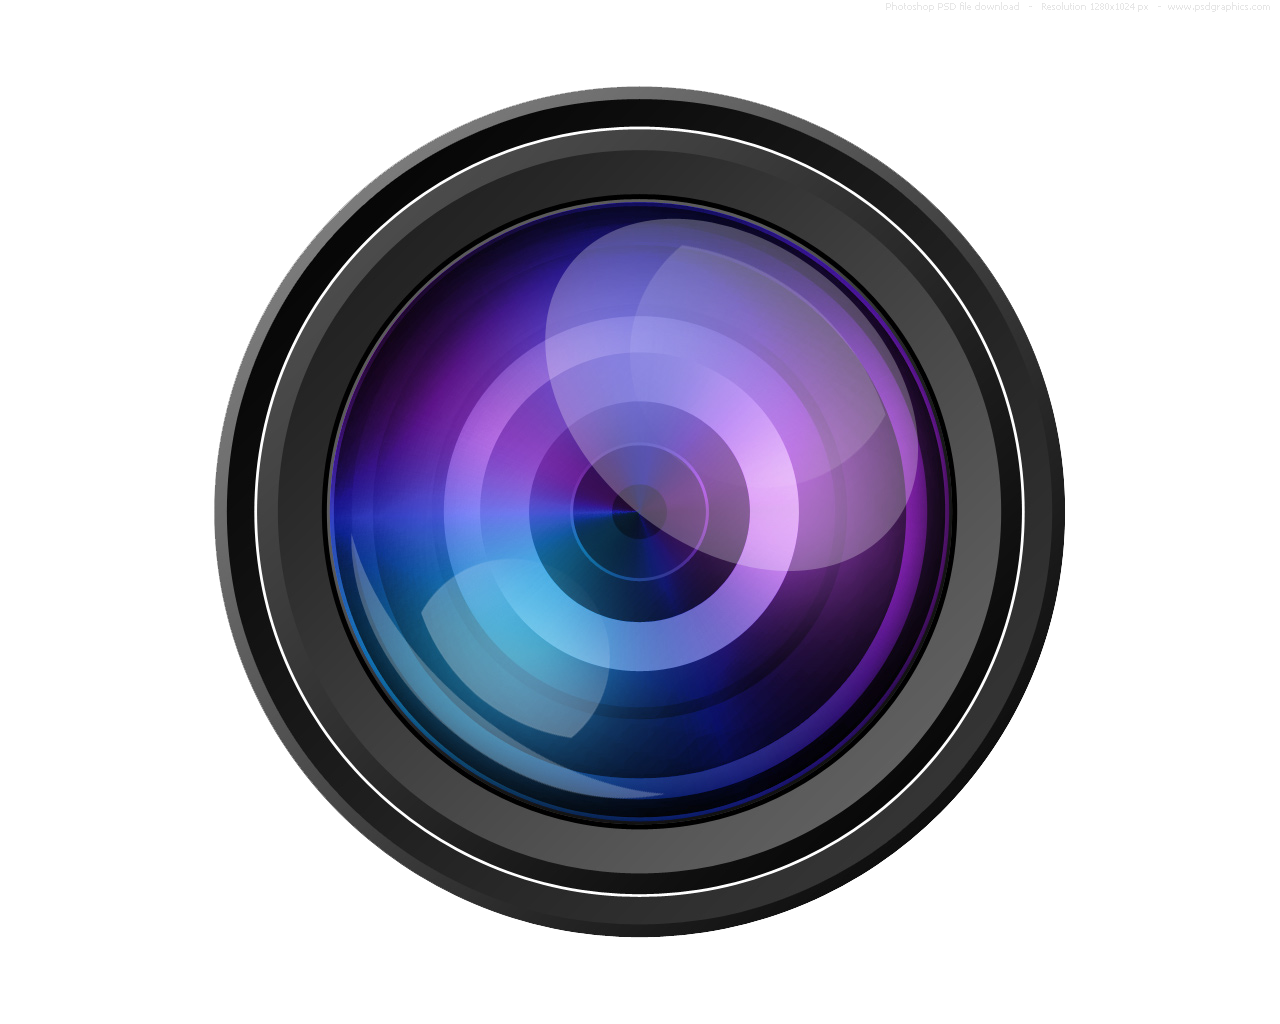 Camera Lens PNG Image in Transparent